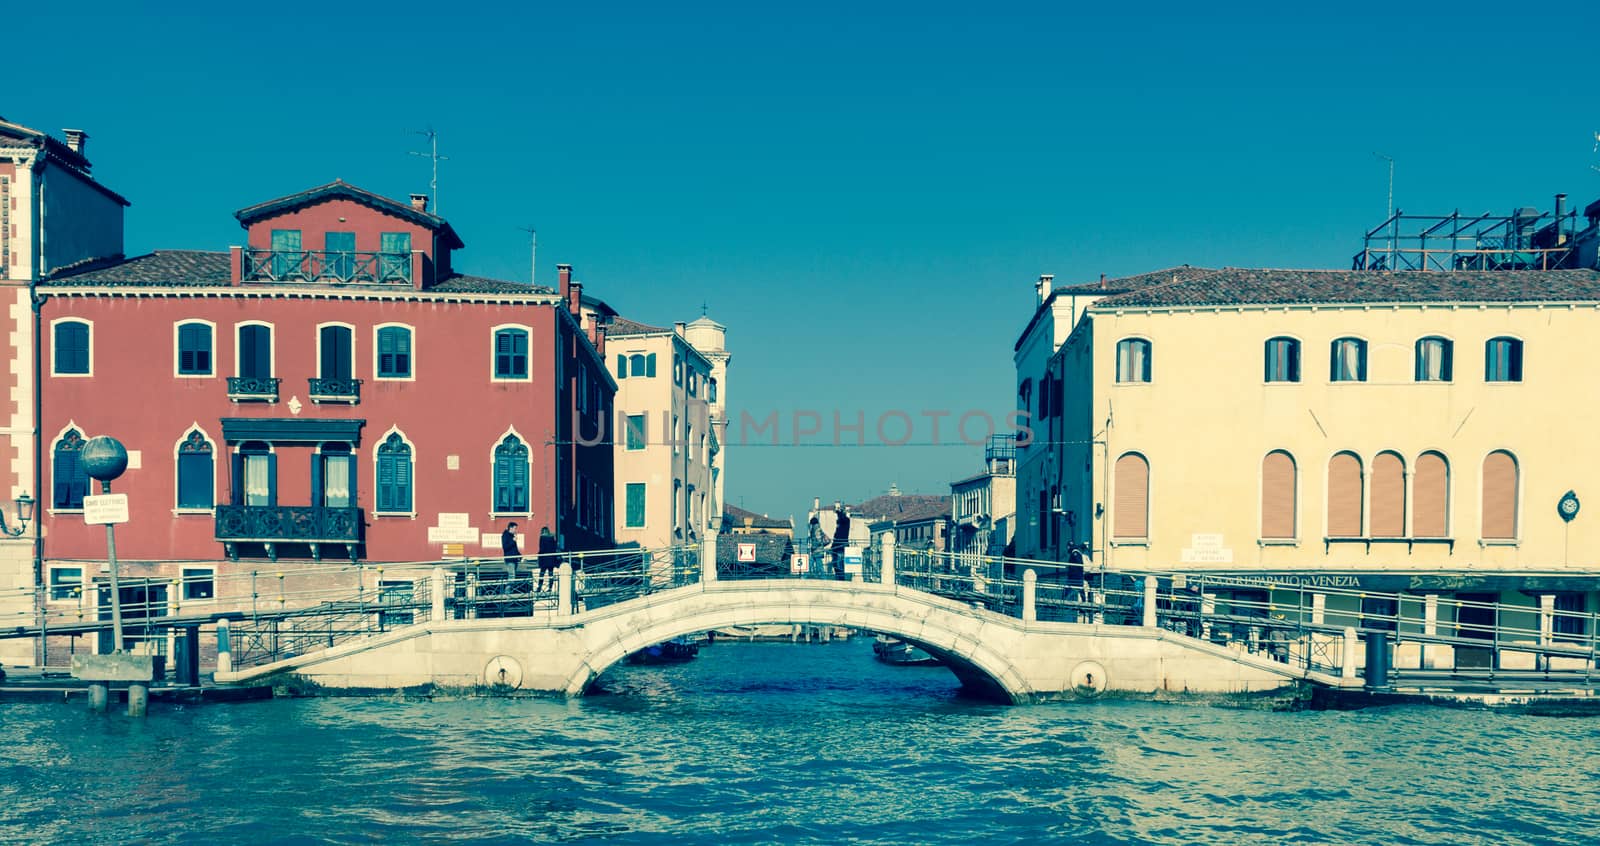 Venice, Italy by goghy73